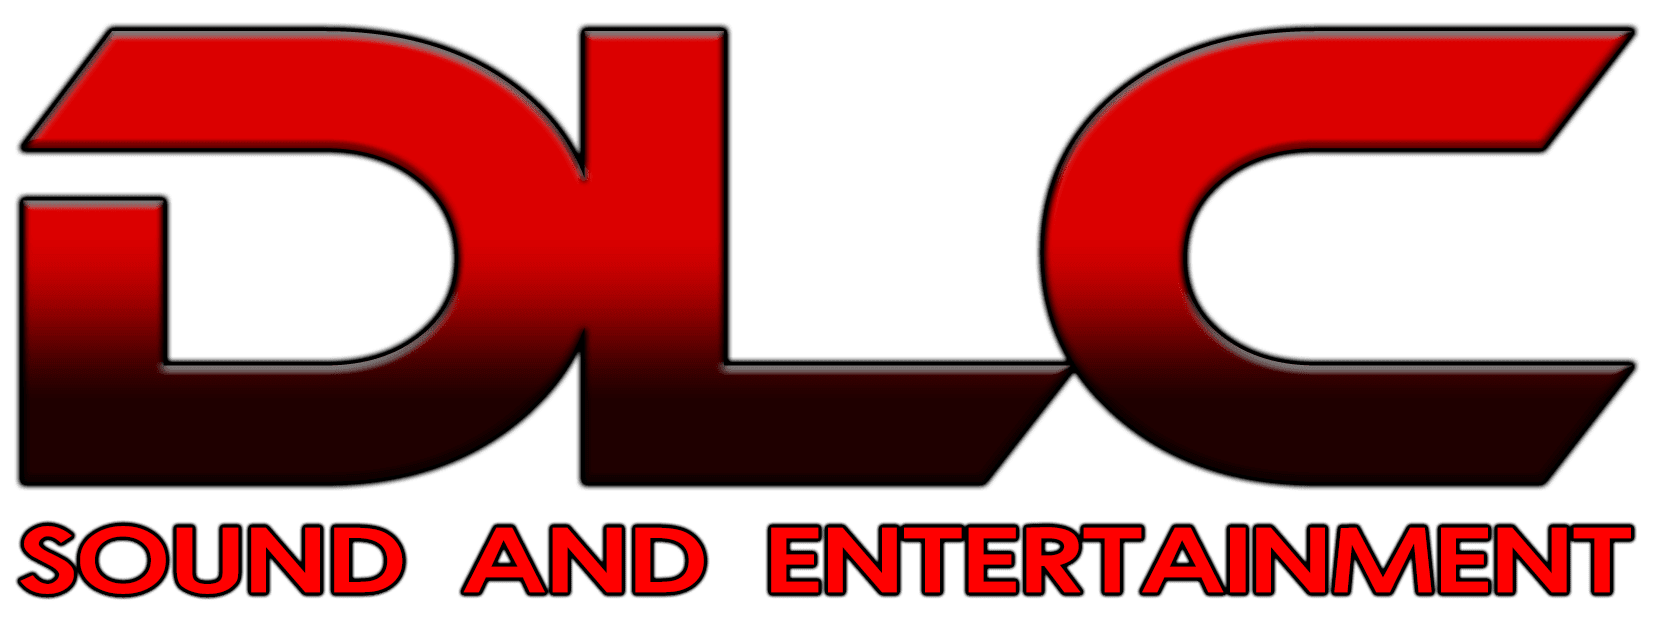 DLC Sound & Entertainment